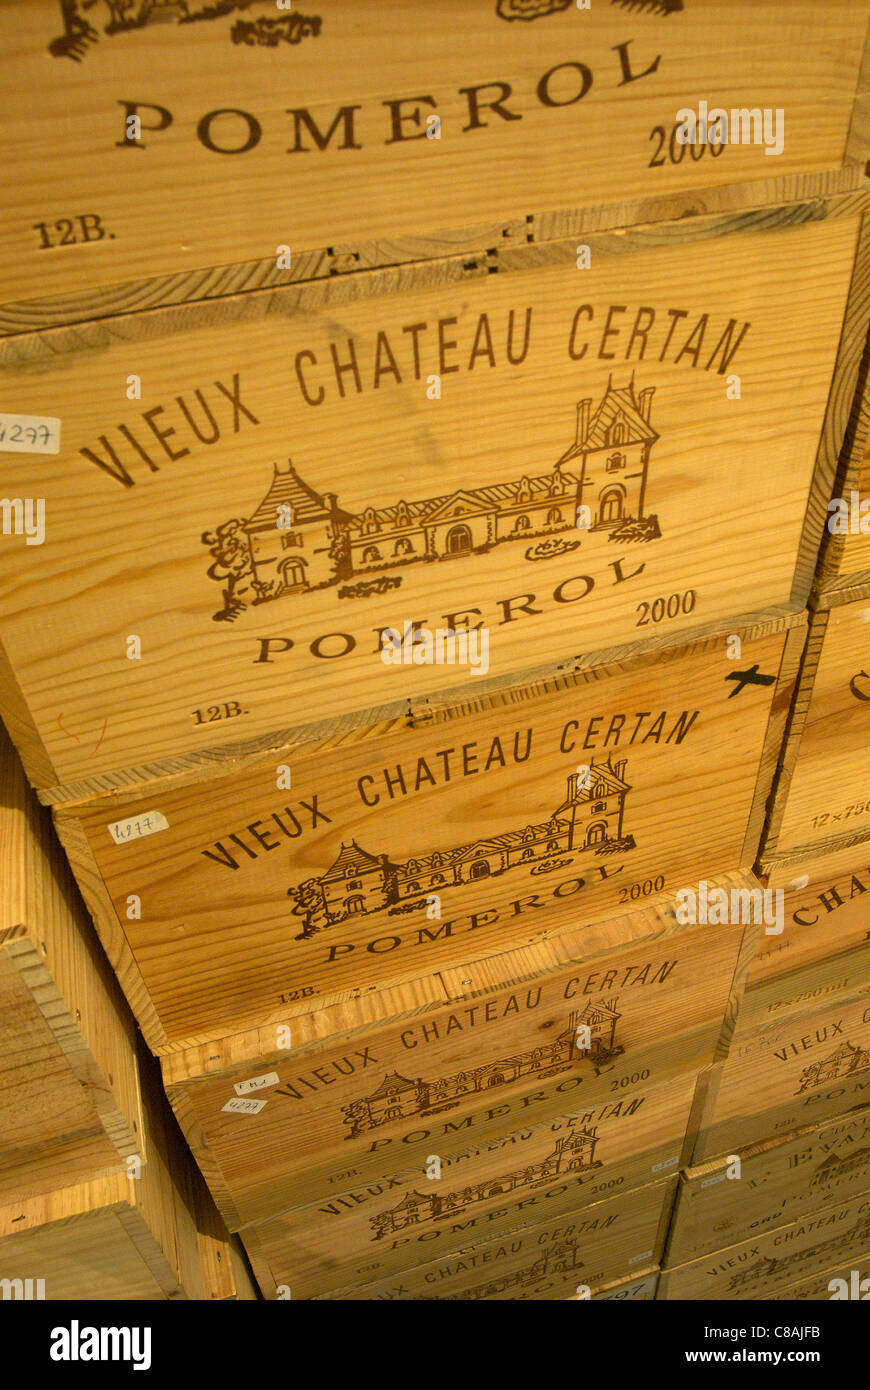 cases od Pomerol wine Stock Photo